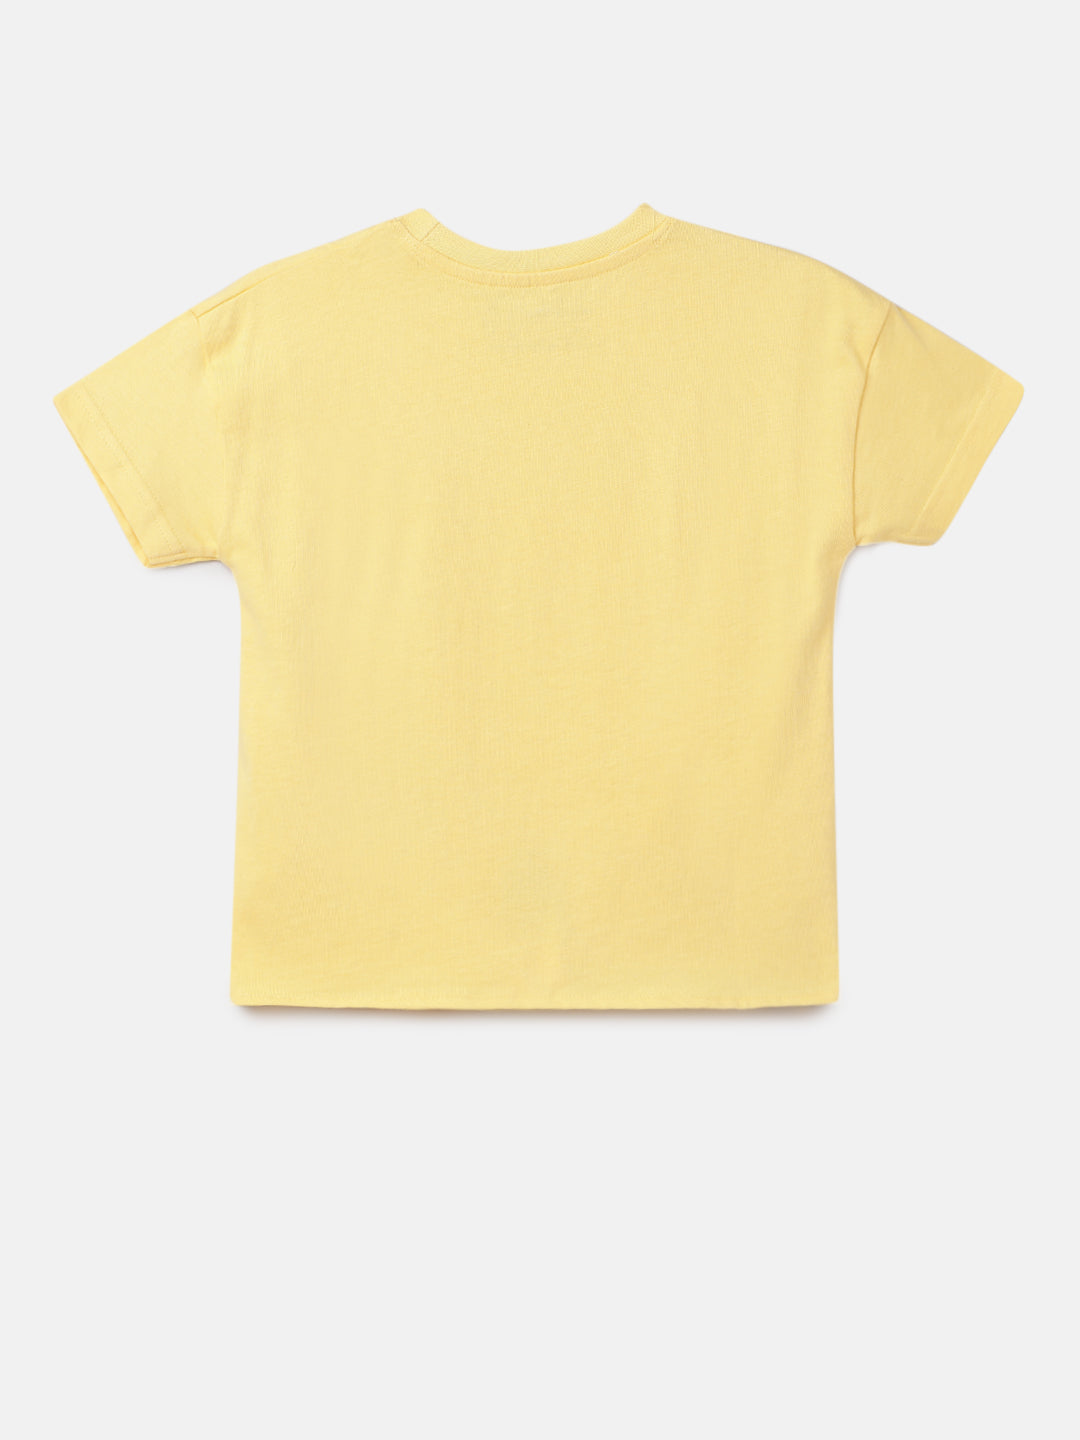 Girls Printed Smart Tie Front Yellow T-Shirt